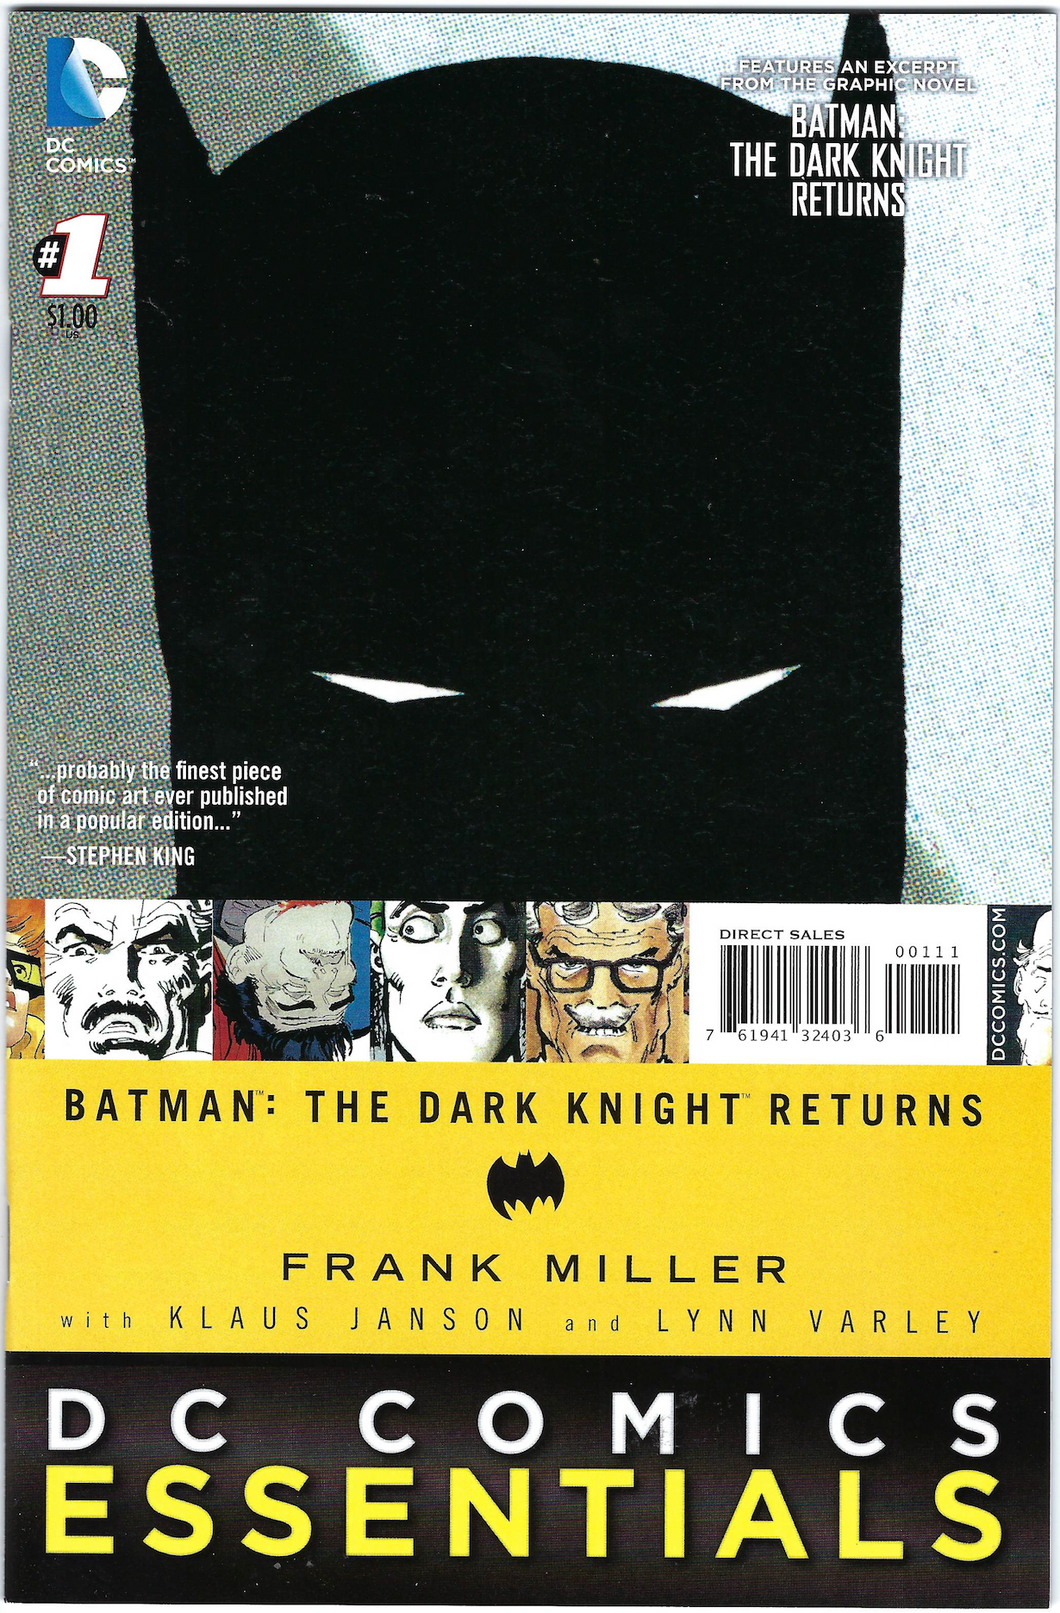 DC Essentials Batman the Dark Knight Returns 1 (Frank Miller)